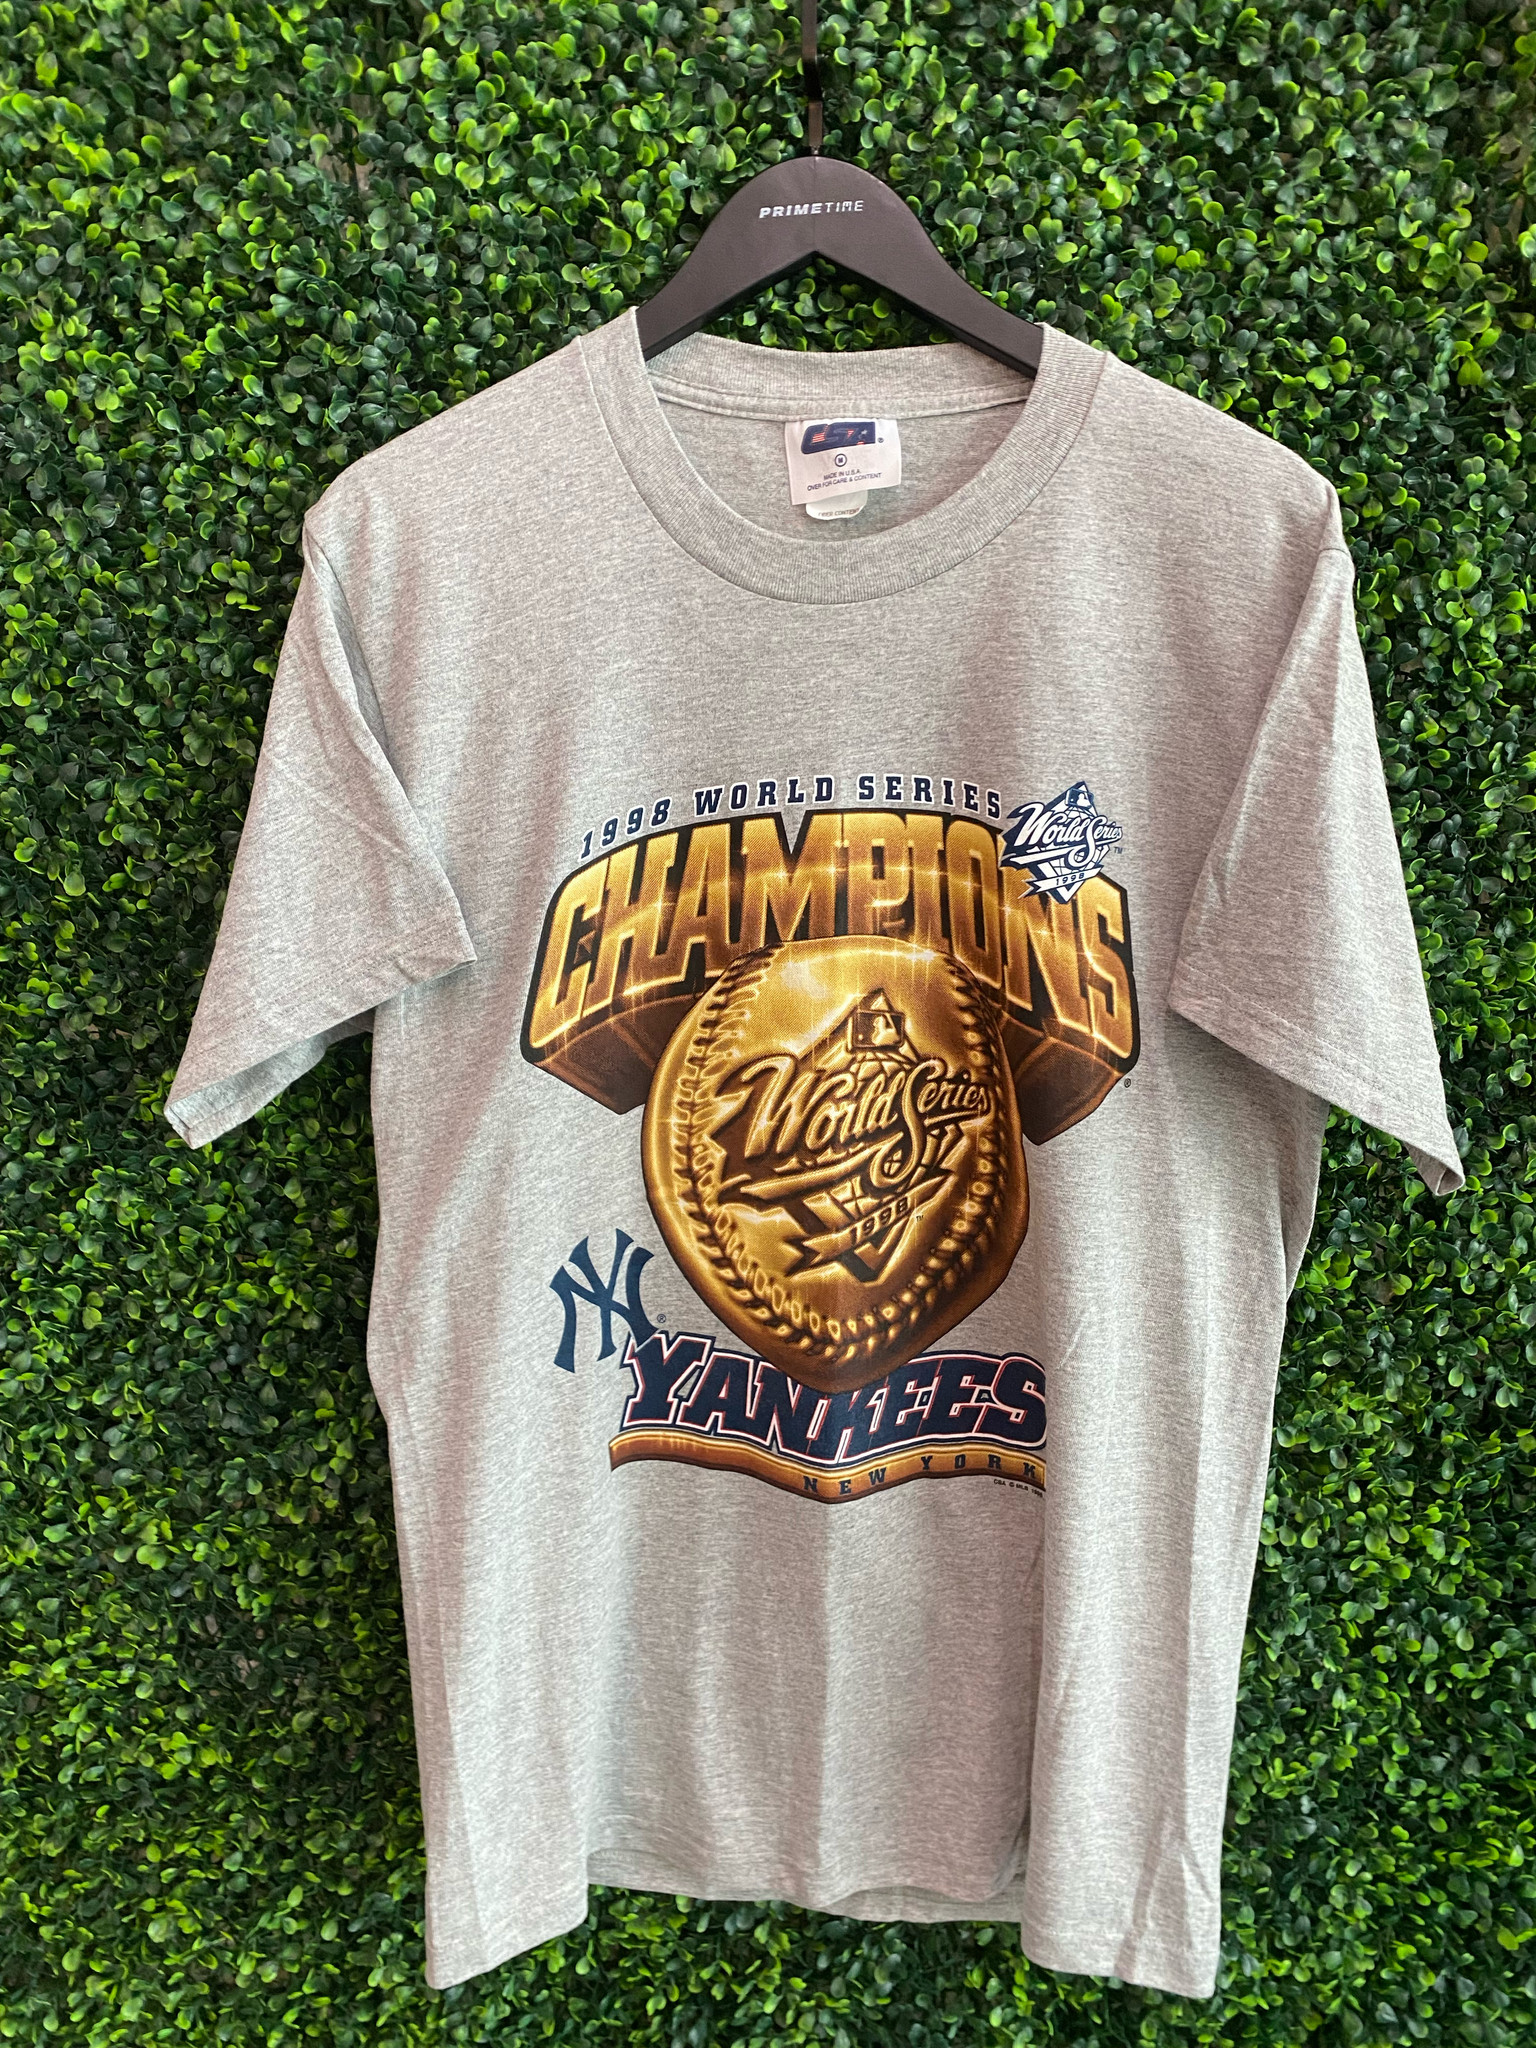 Vintage 1998 New York Yankees World Series Champion Faded Tee XL